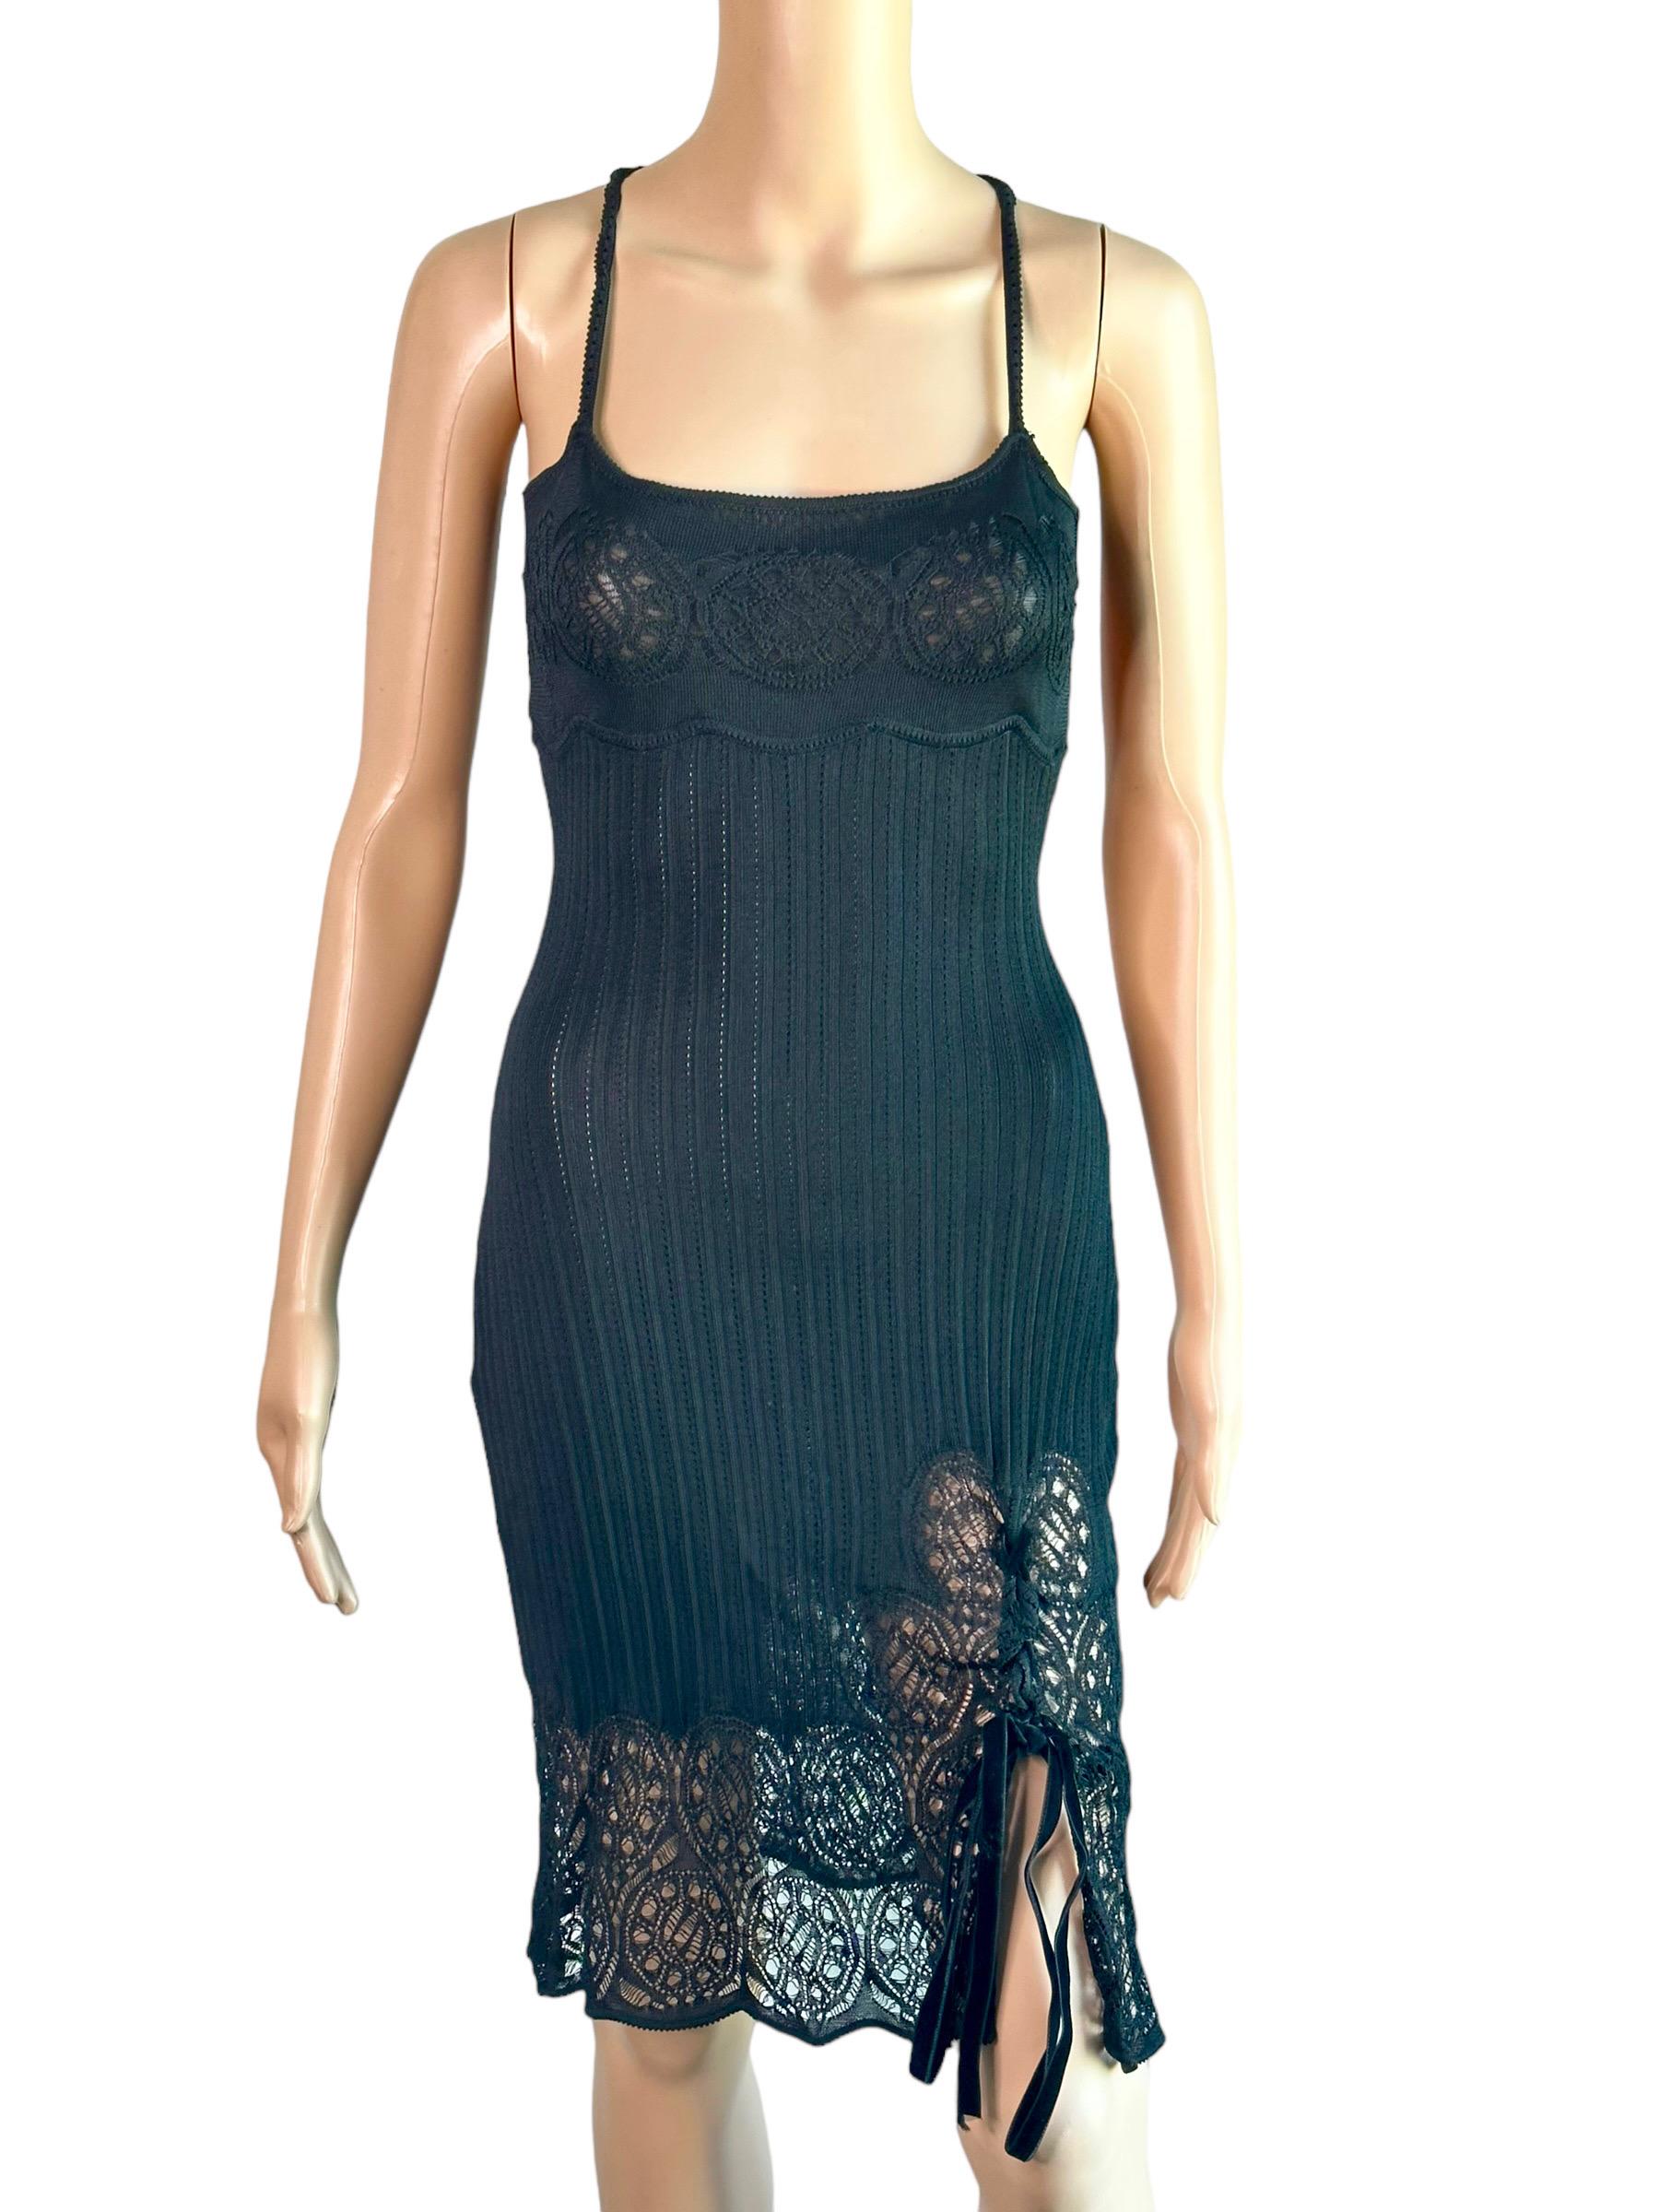 John Galliano S/S 1999 Sheer Lace Open Knit Black Mini Dress For Sale 4